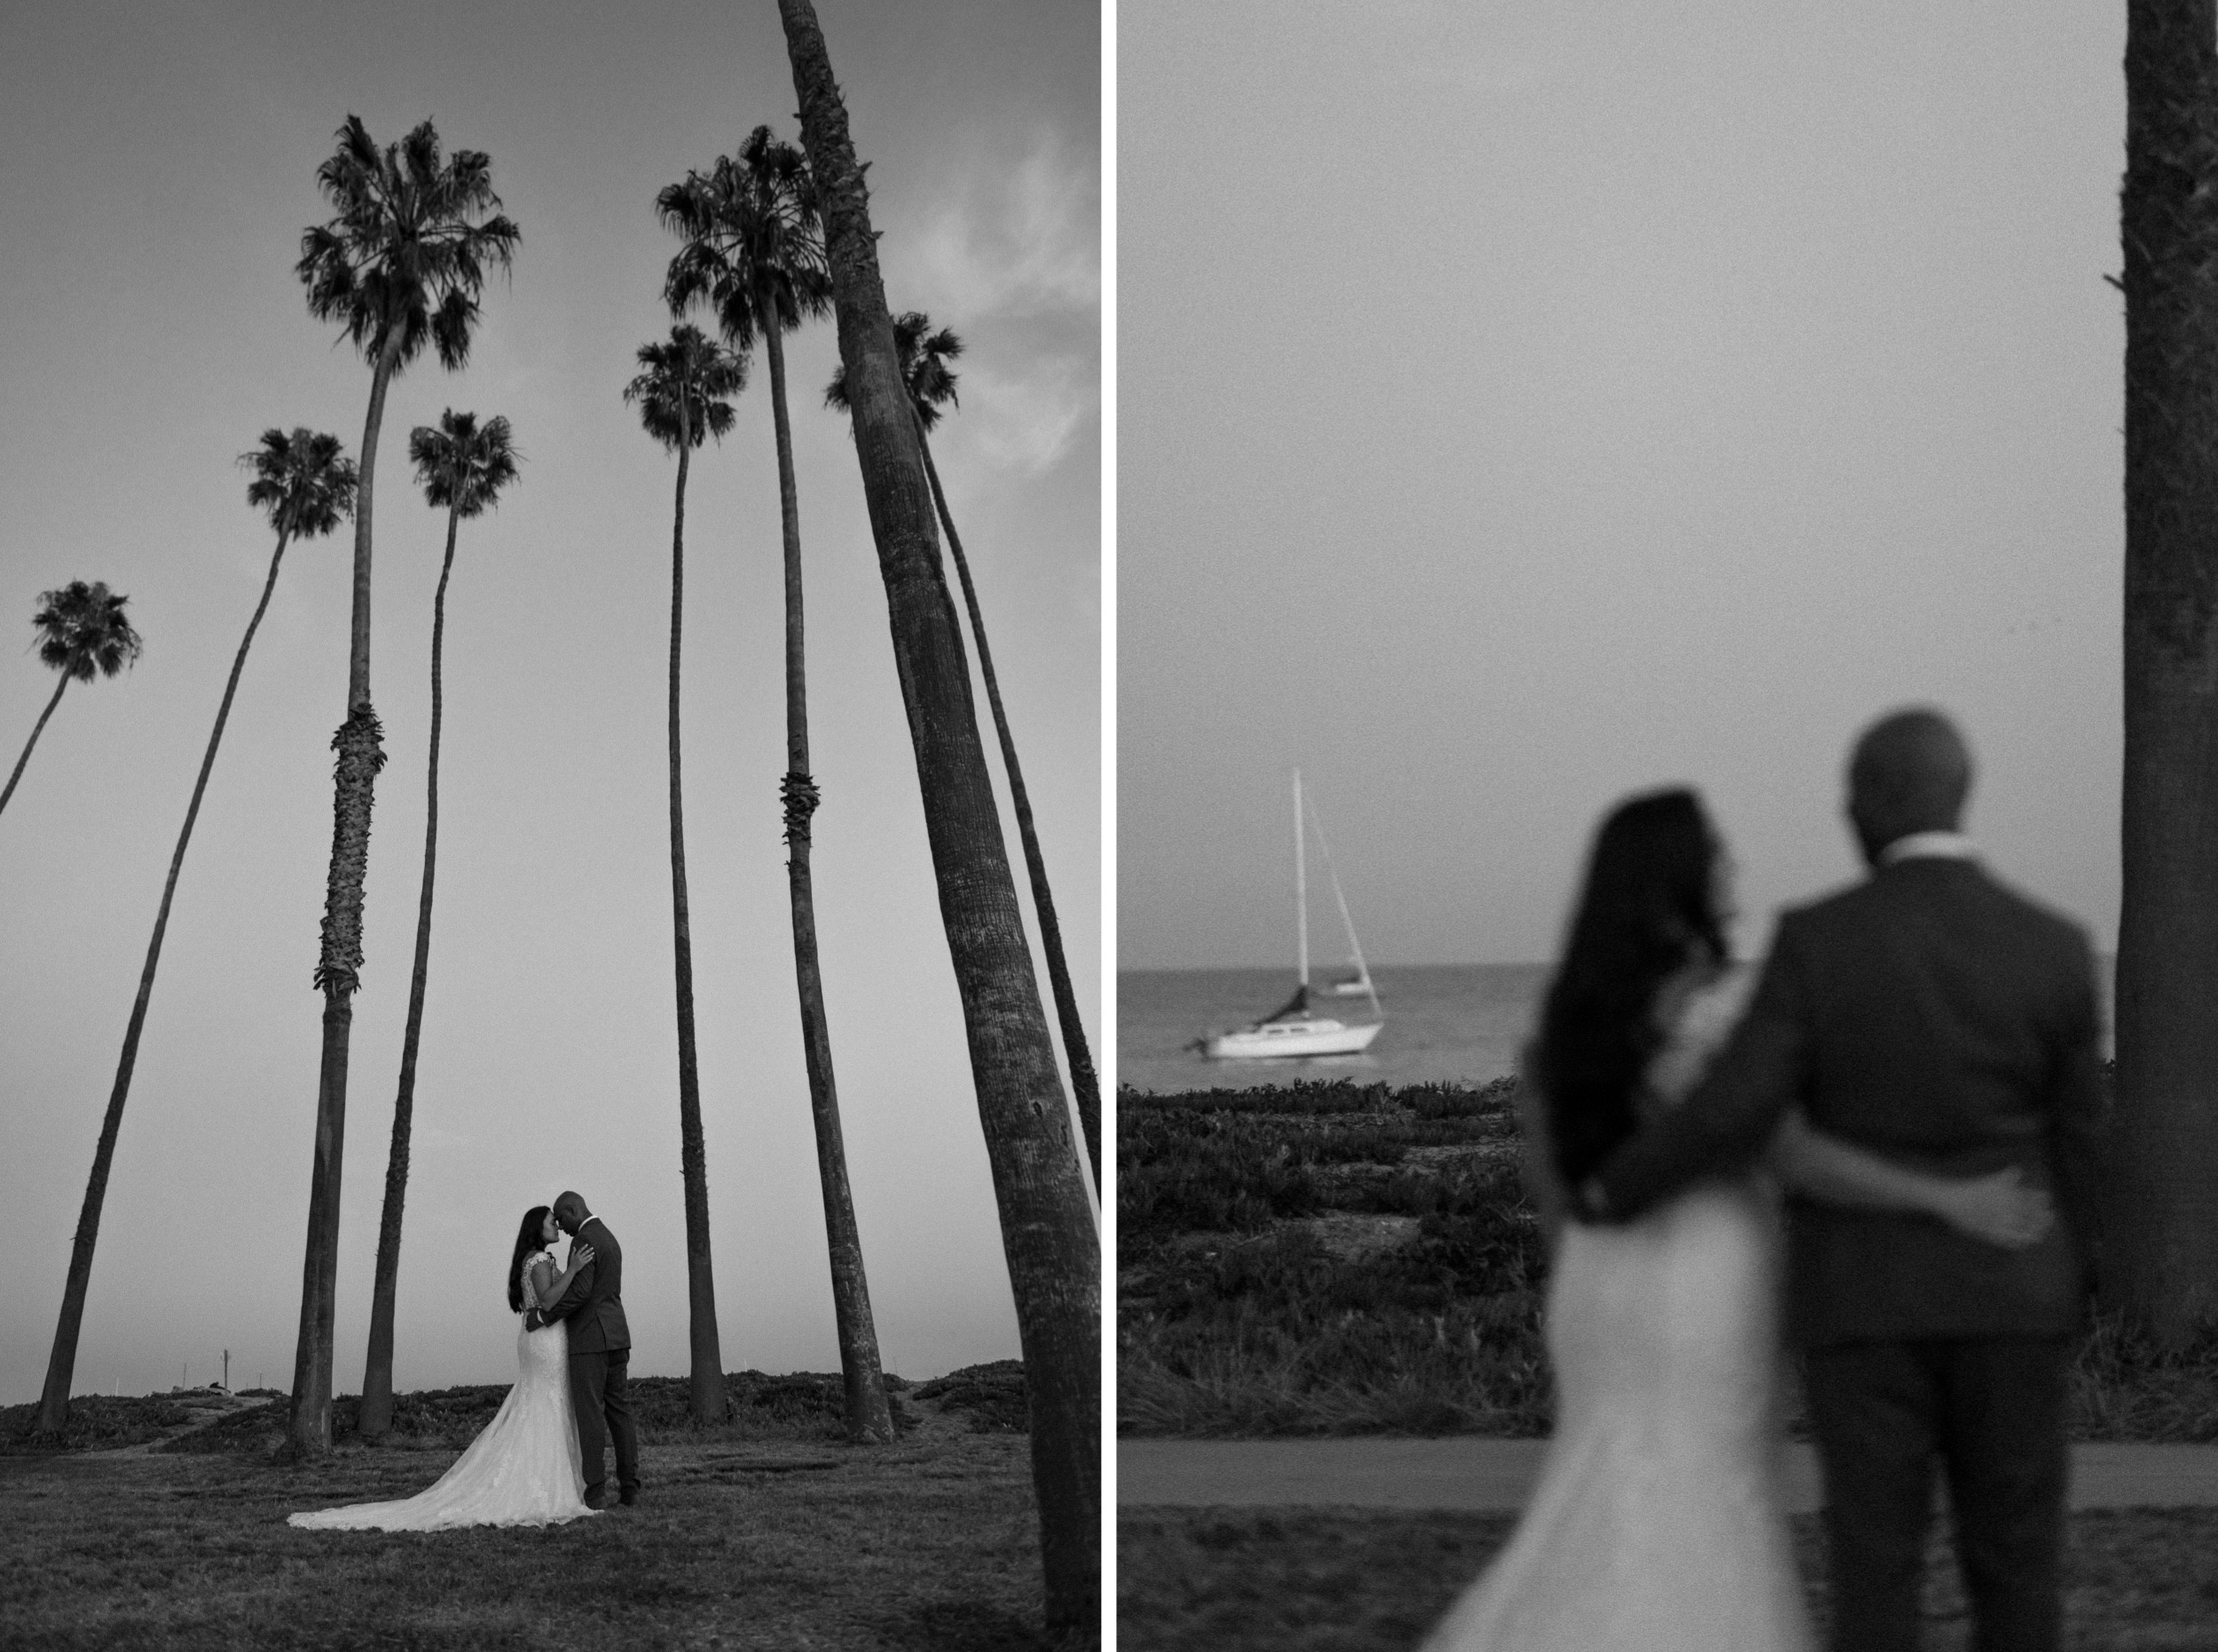 Santa Barbara Courthouse Wedding | Santa Barbara Courthouse Elopement | Elopement Inspiration | Anti-Bride Wedding | Santa Barbara Wedding by Ashley Joyce, 2022